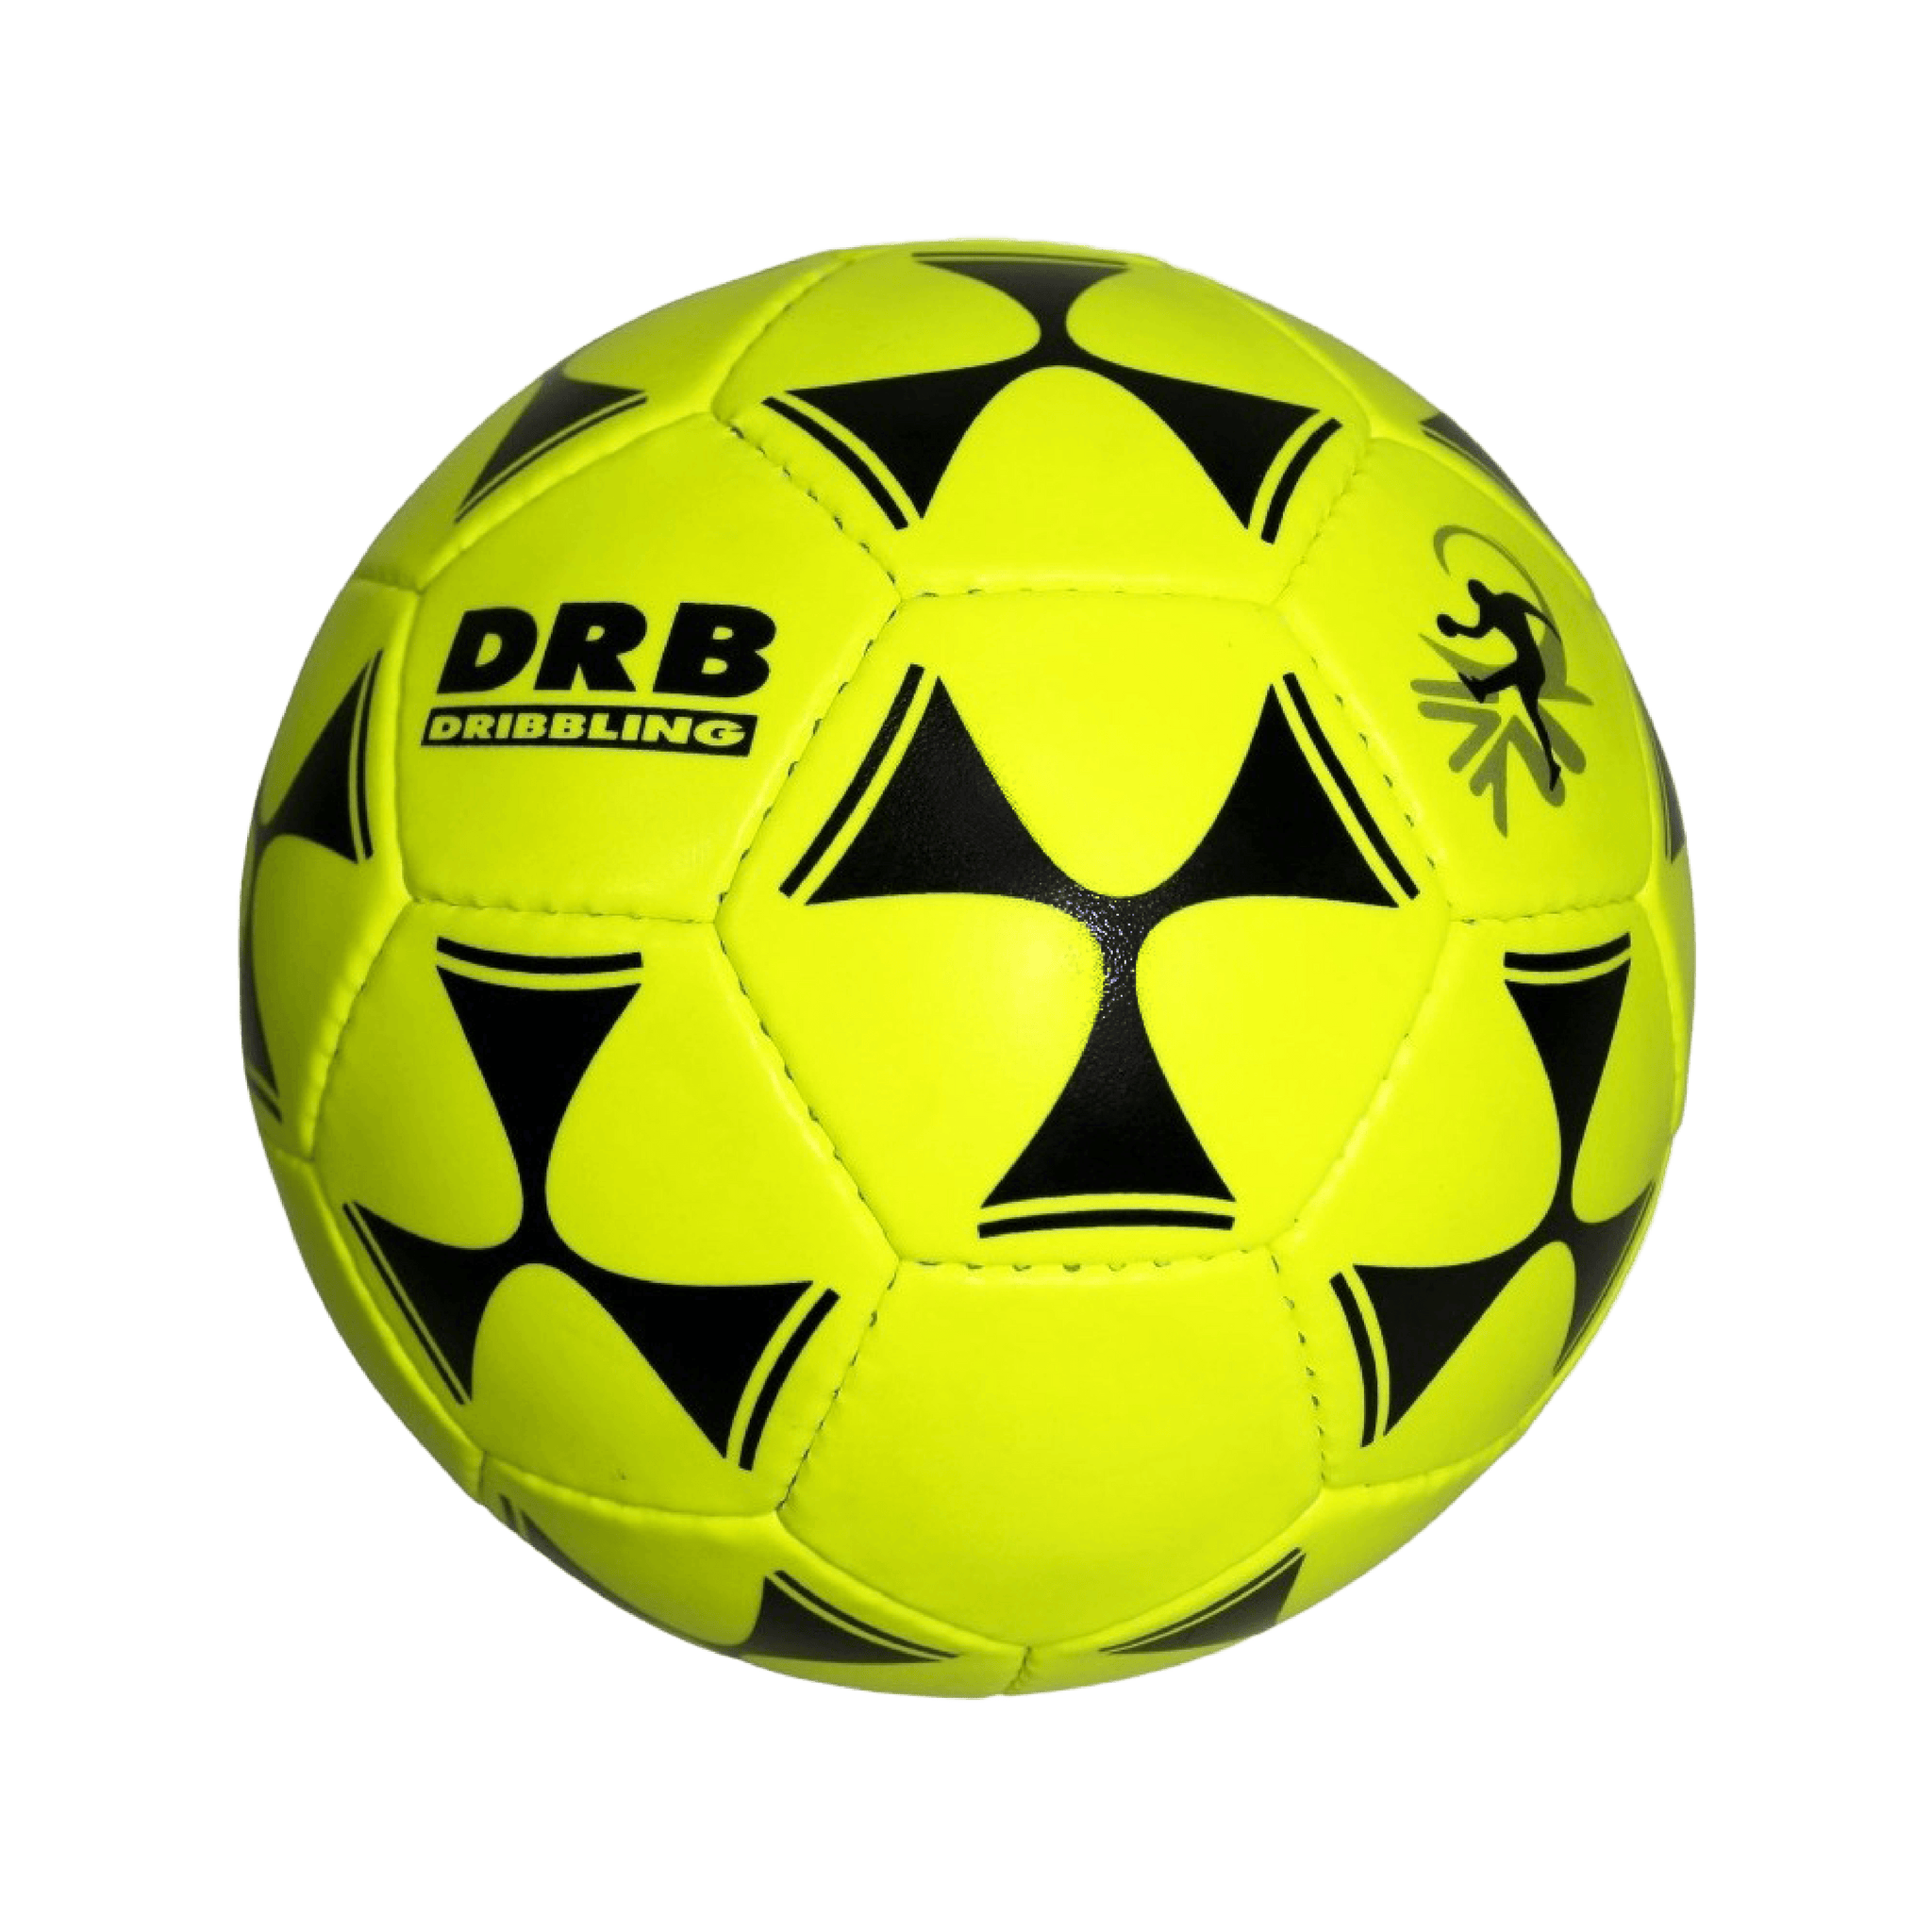 Balón Futbol Origen Golty - Atlanta Deportes